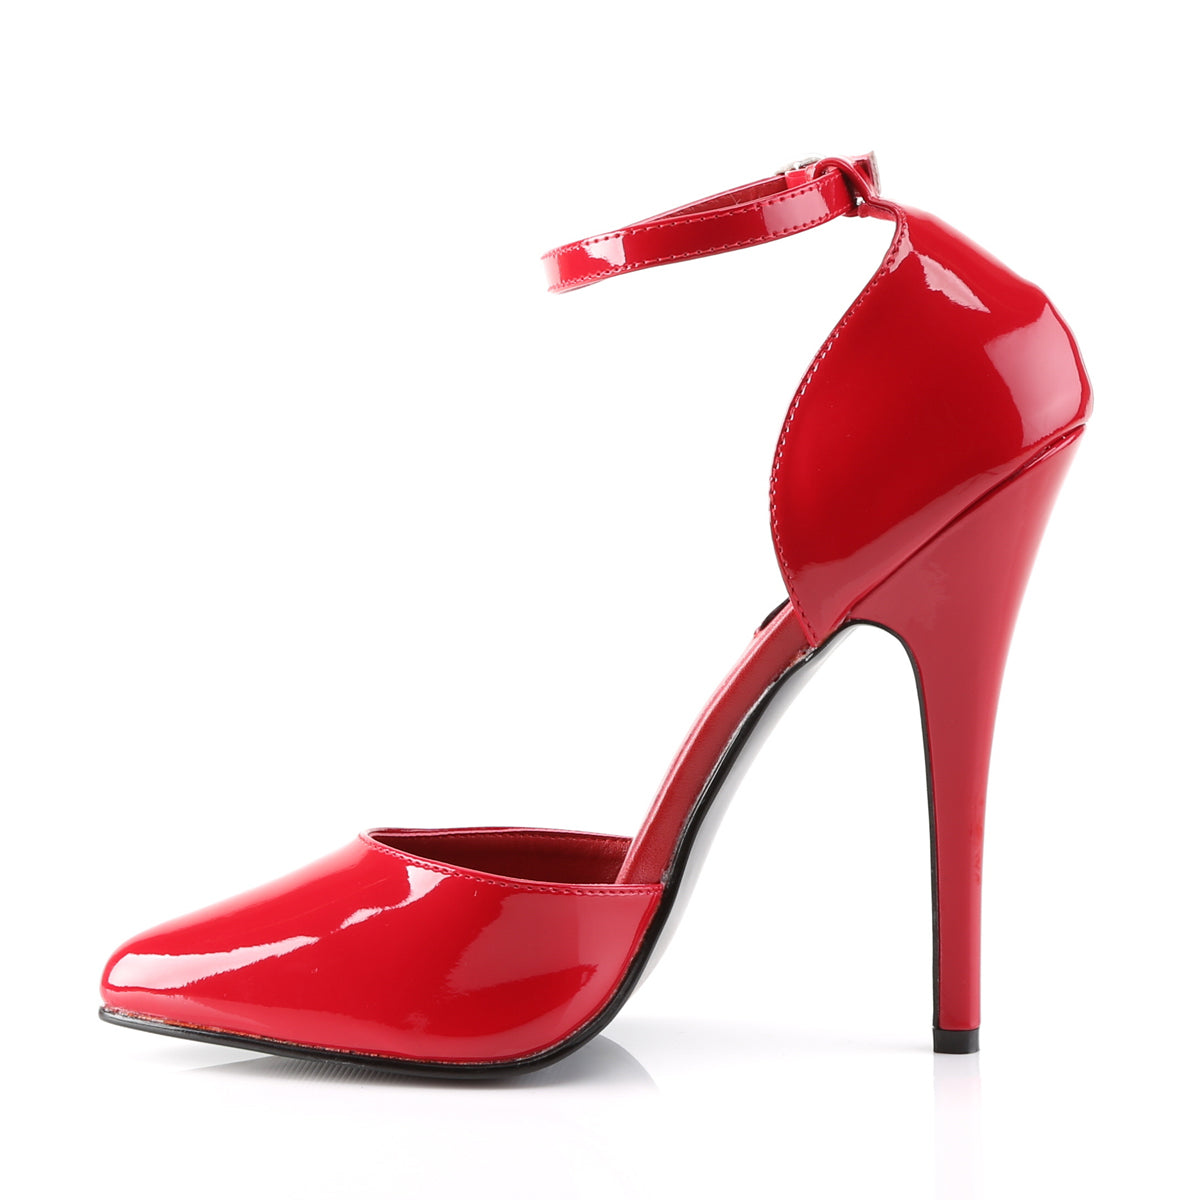 DOMINA-402 Devious Heels Red Patent Single Soles [Fetish Heels]